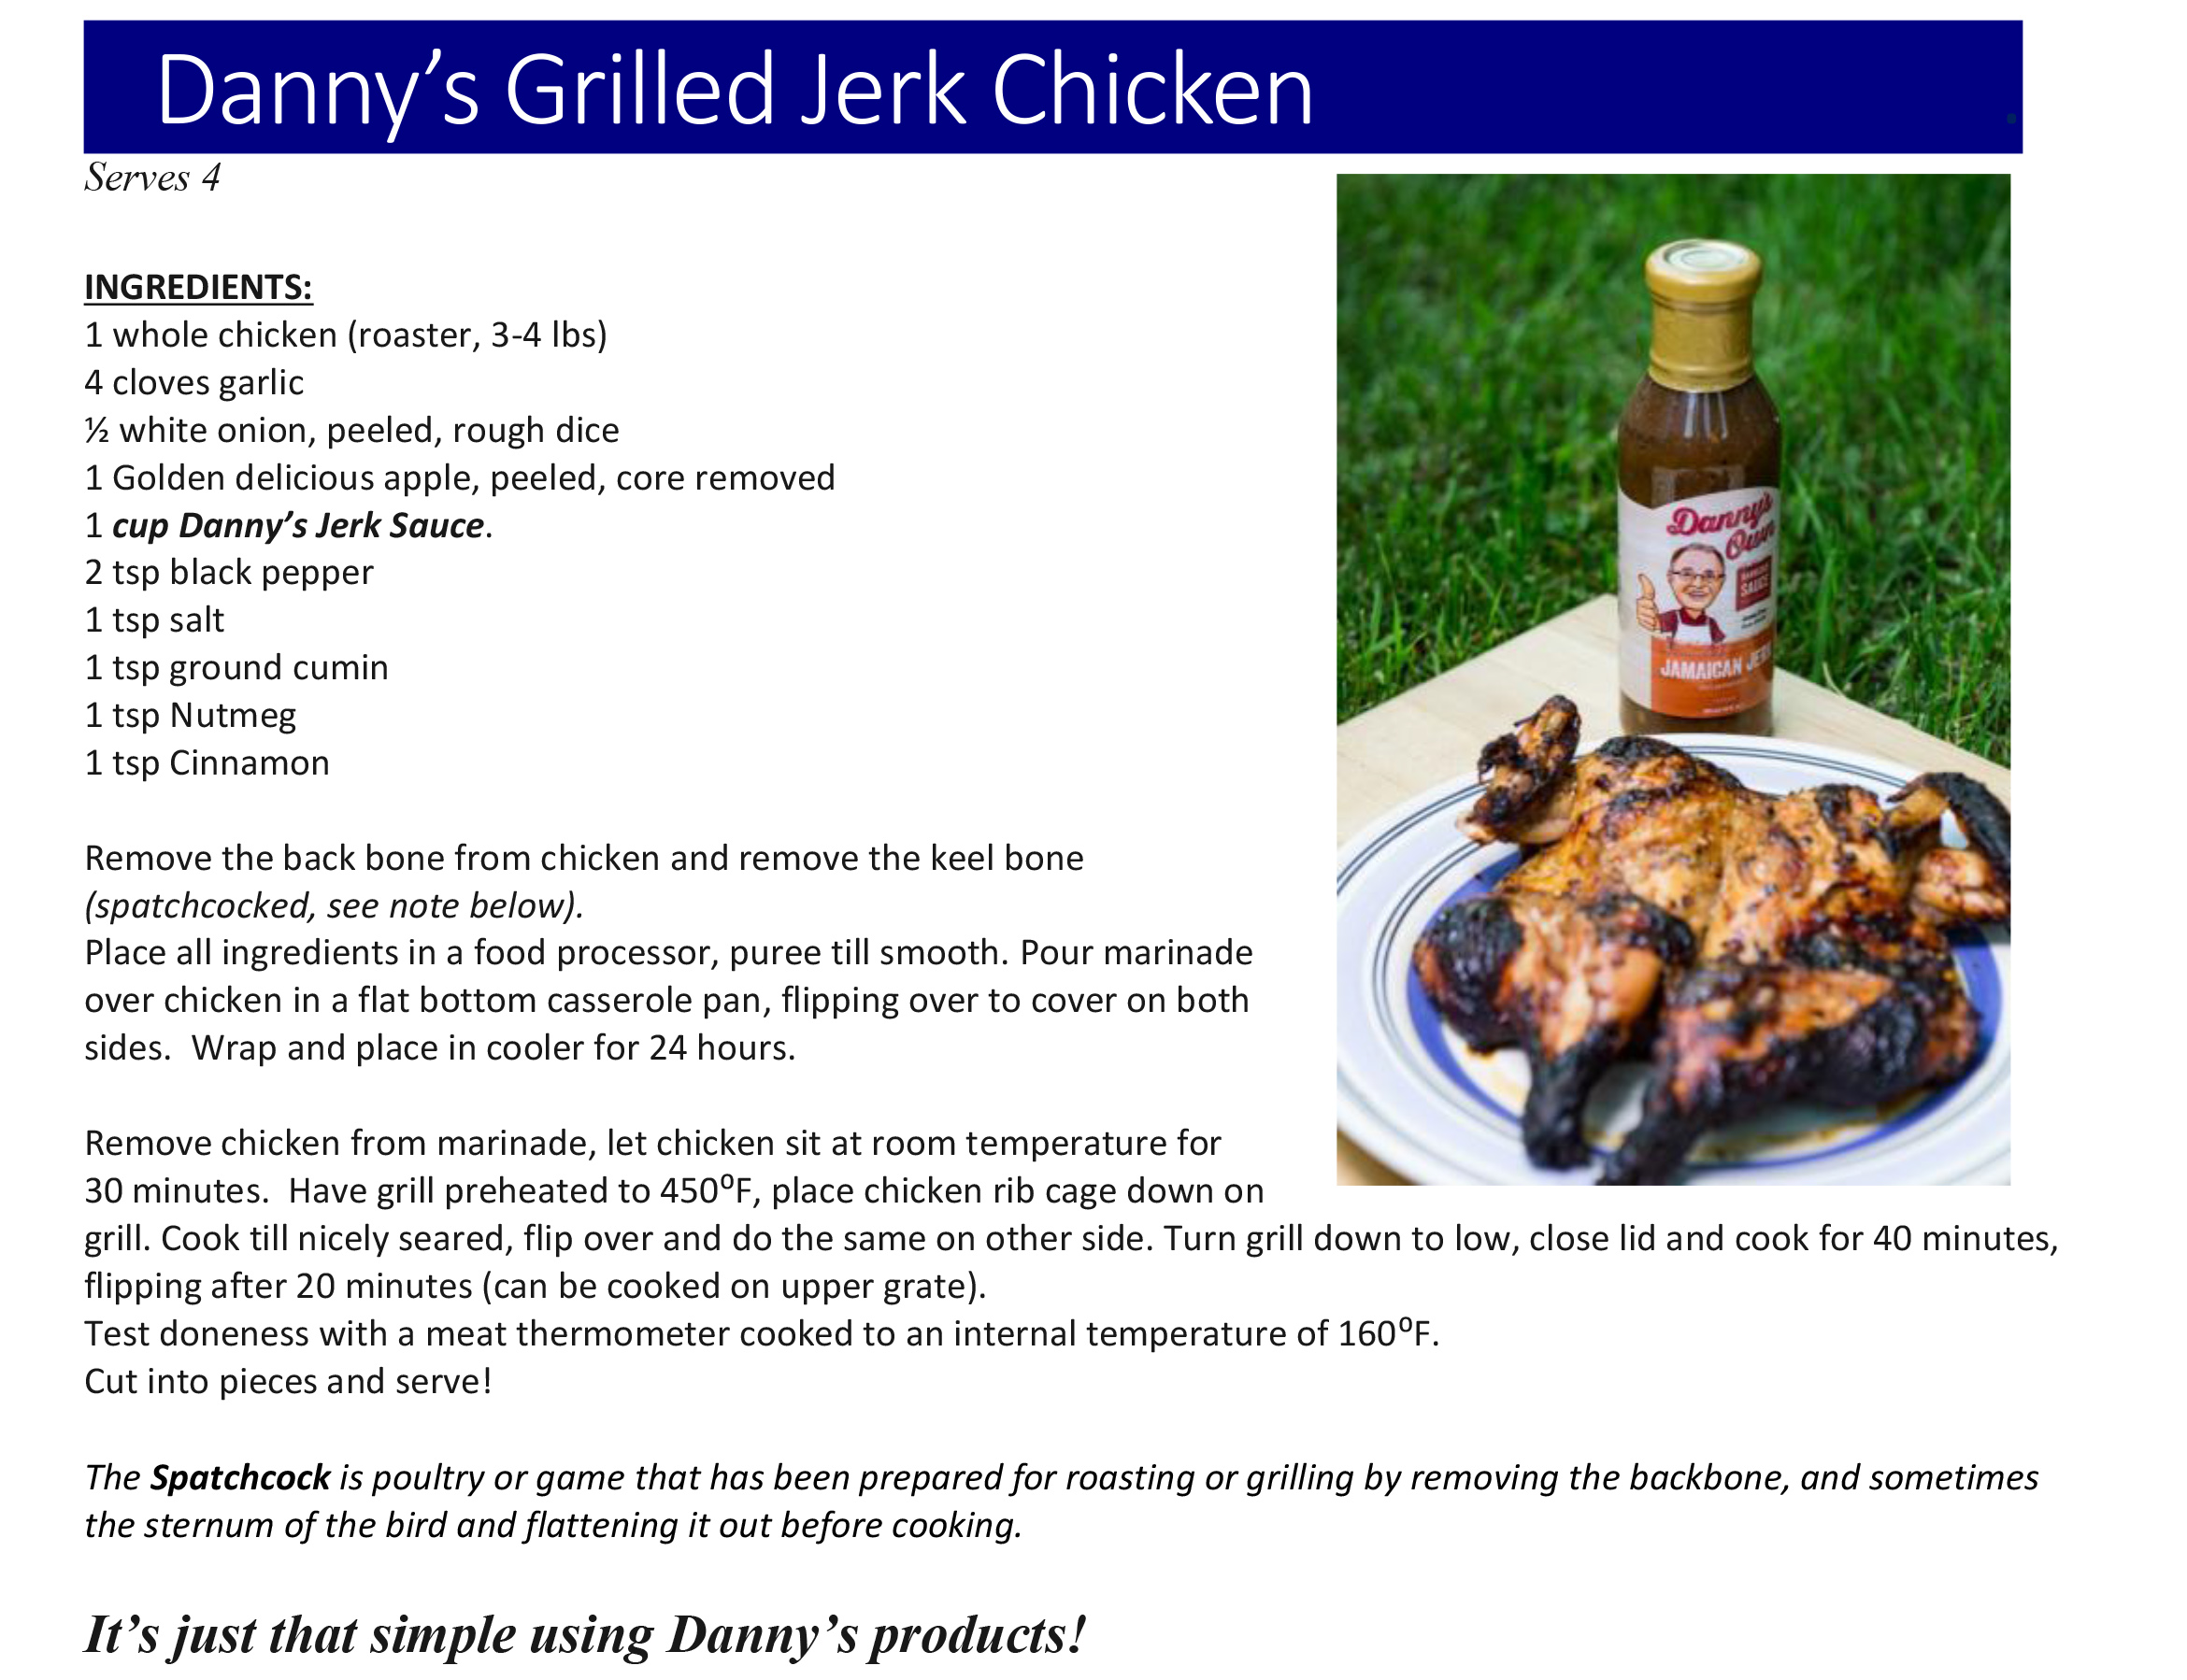 Danny's Grilled Jerk Chicken